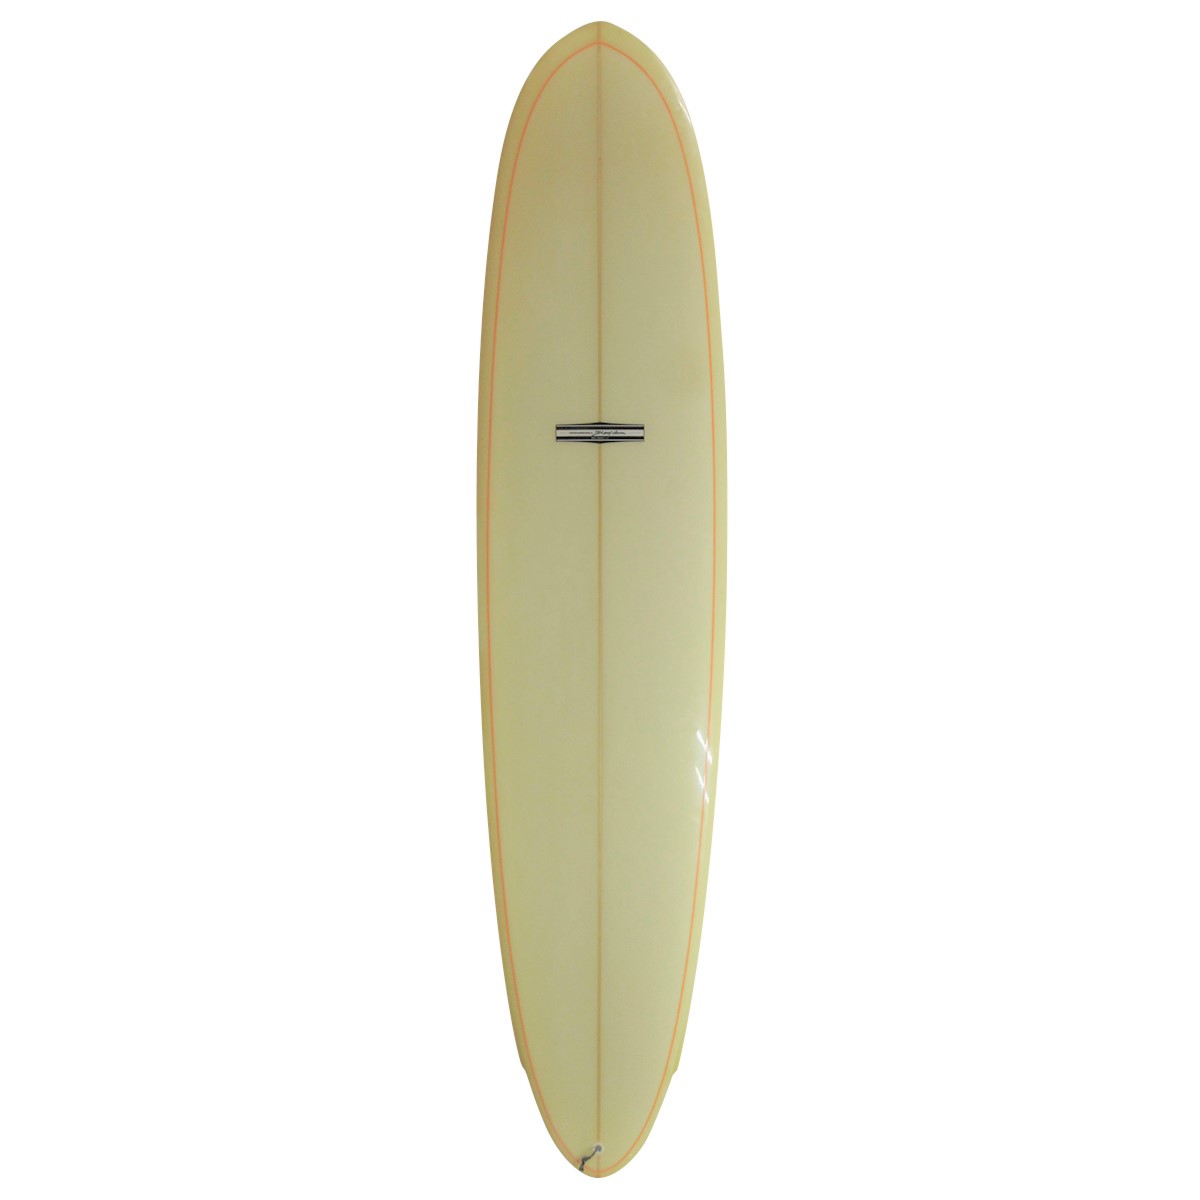 YU CLASSIC SURFBOARD